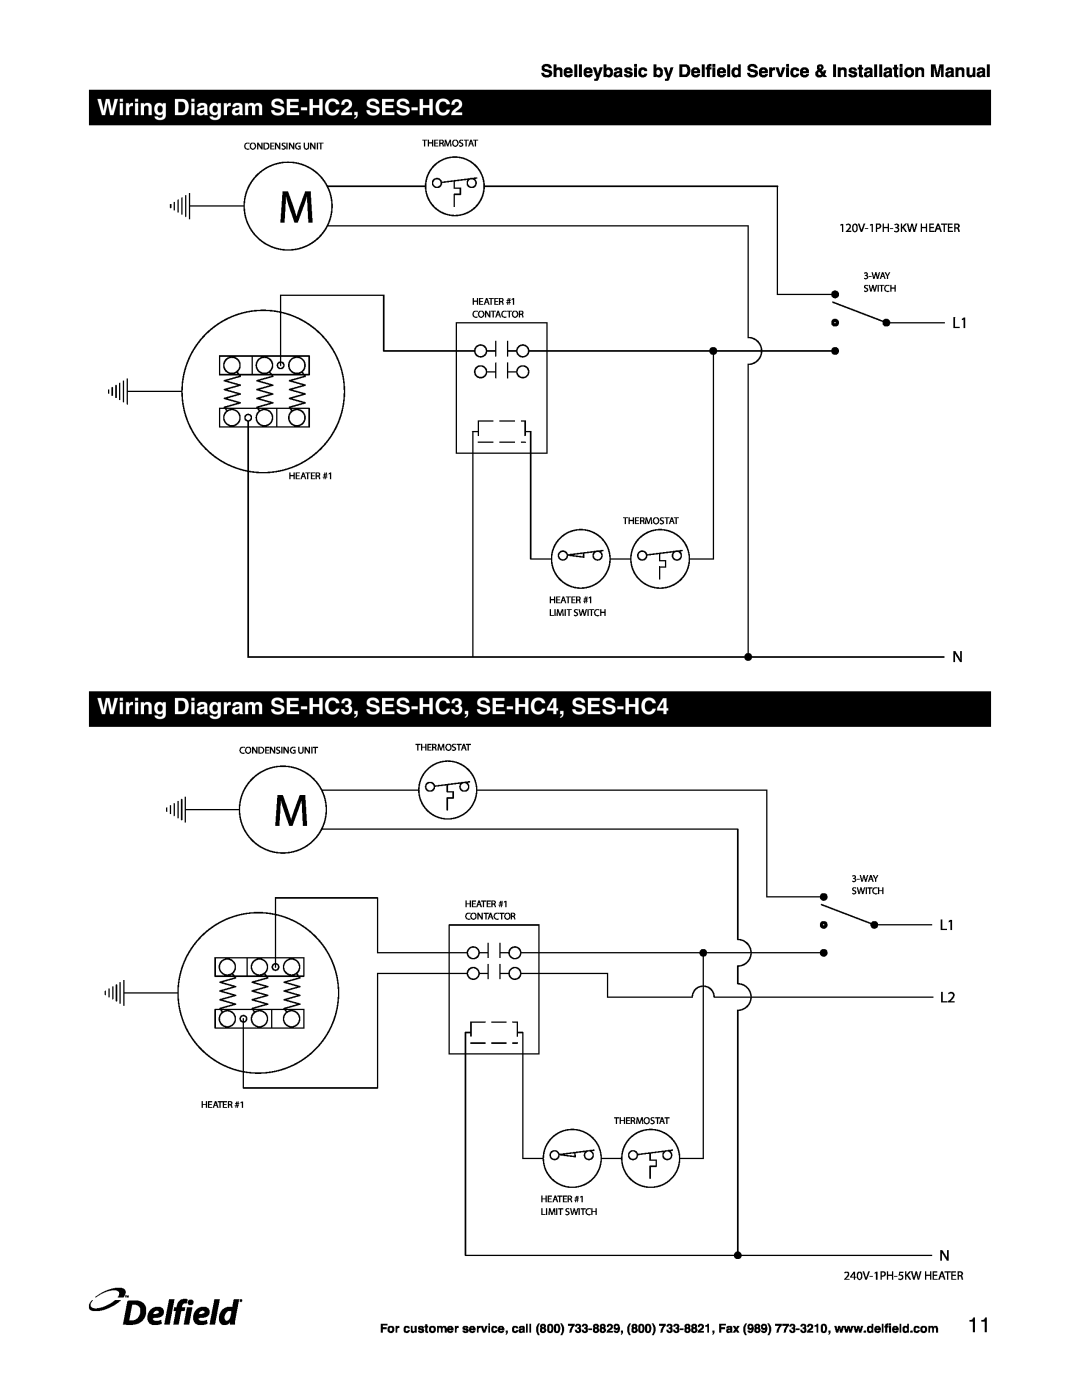 Delfield Shelleybasic Wiring Diagram SE-HC2, SES-HC2, Wiring Diagram SE-HC3, SES-HC3, SE-HC4, SES-HC4, Delfield, L1 N 